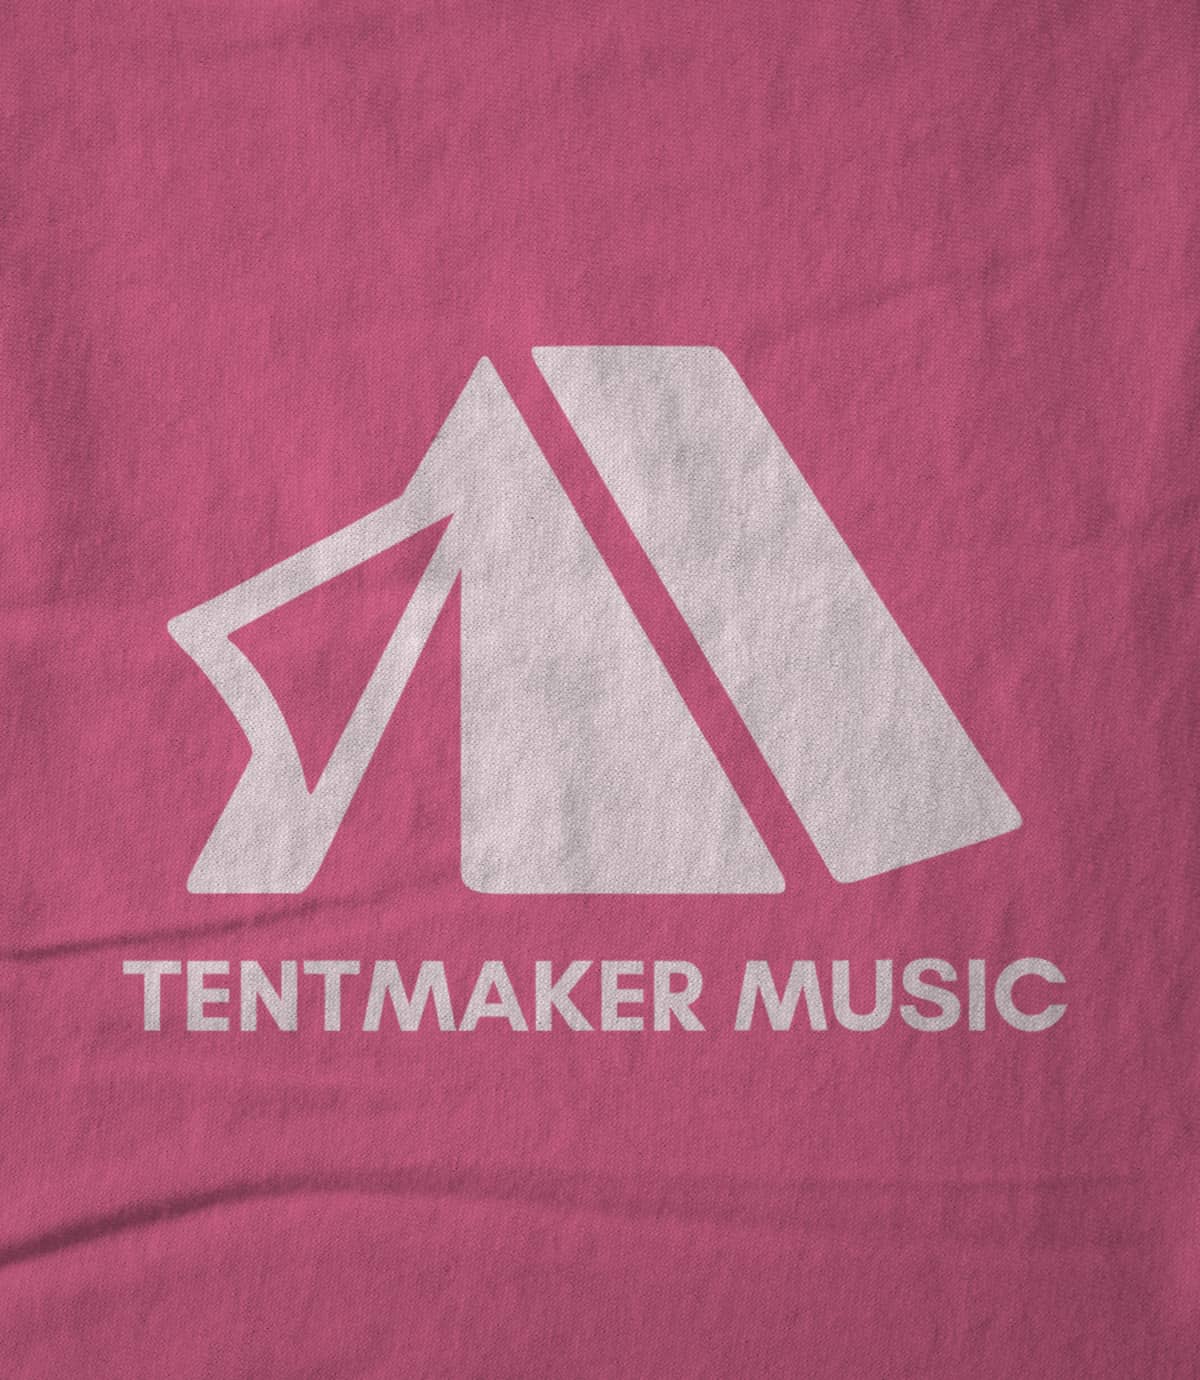 Tentmaker Music